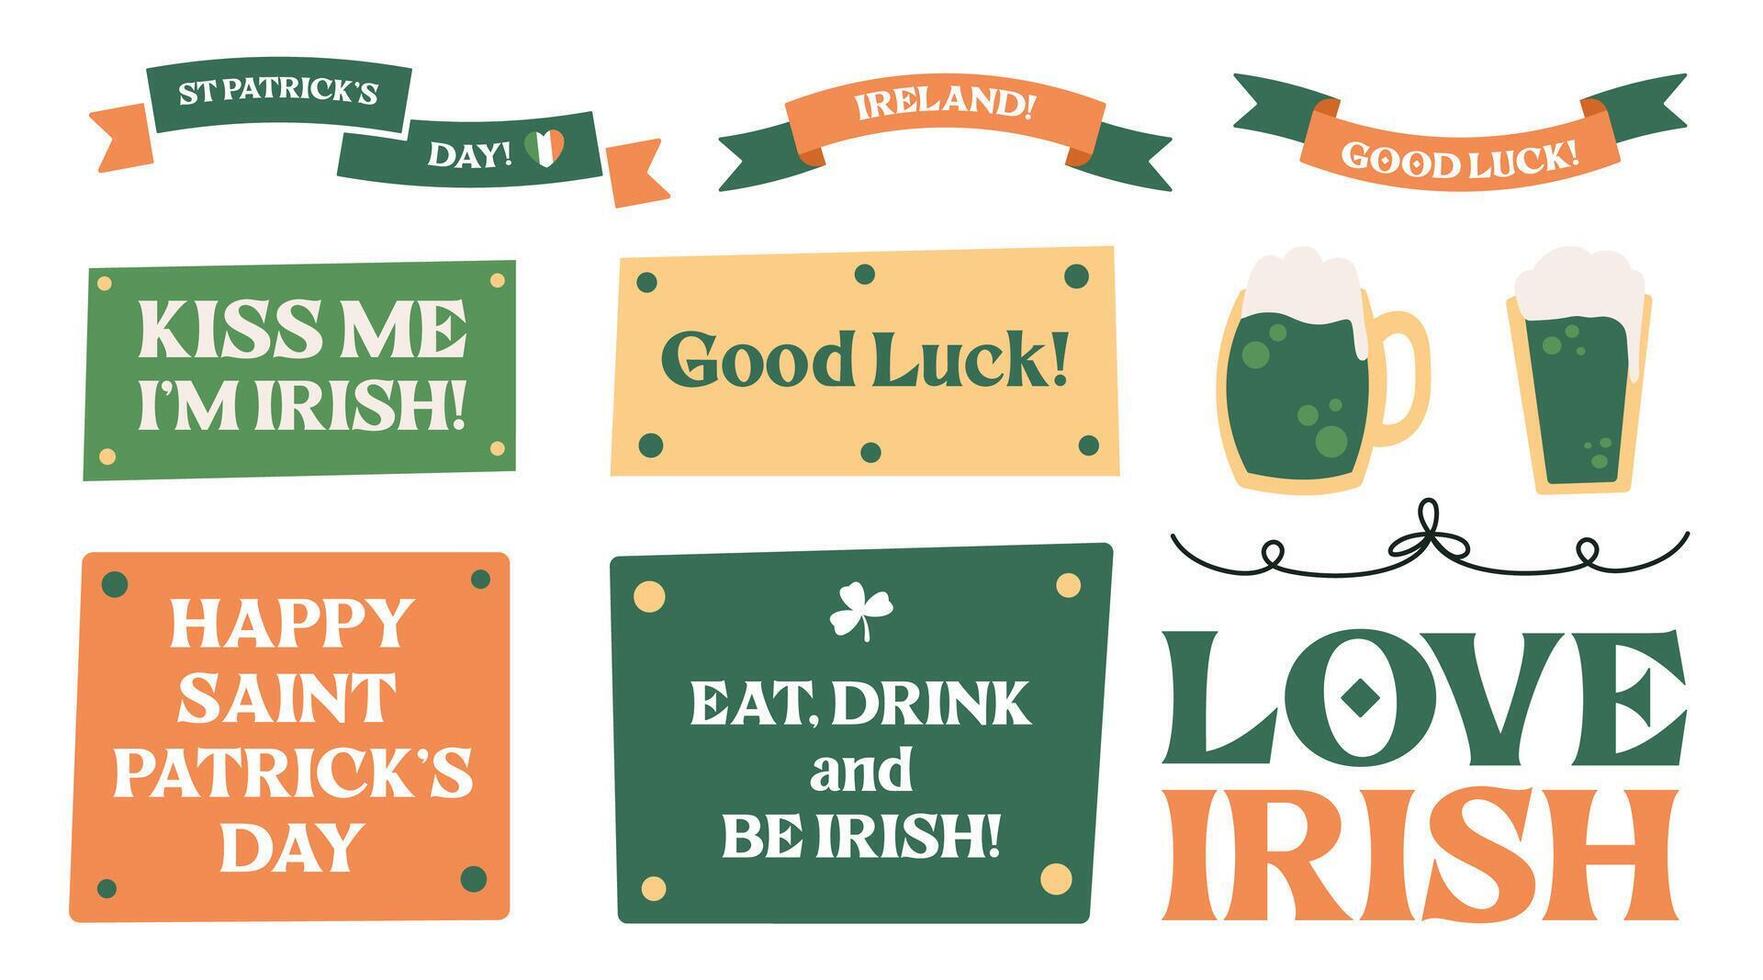 Saint Patrick's Day sticker set, Irish holiday design elements with Irish flags, flag decorations, green beer, hats, speech bubbles, horseshoe and leprechaun gold. Vector illustration.